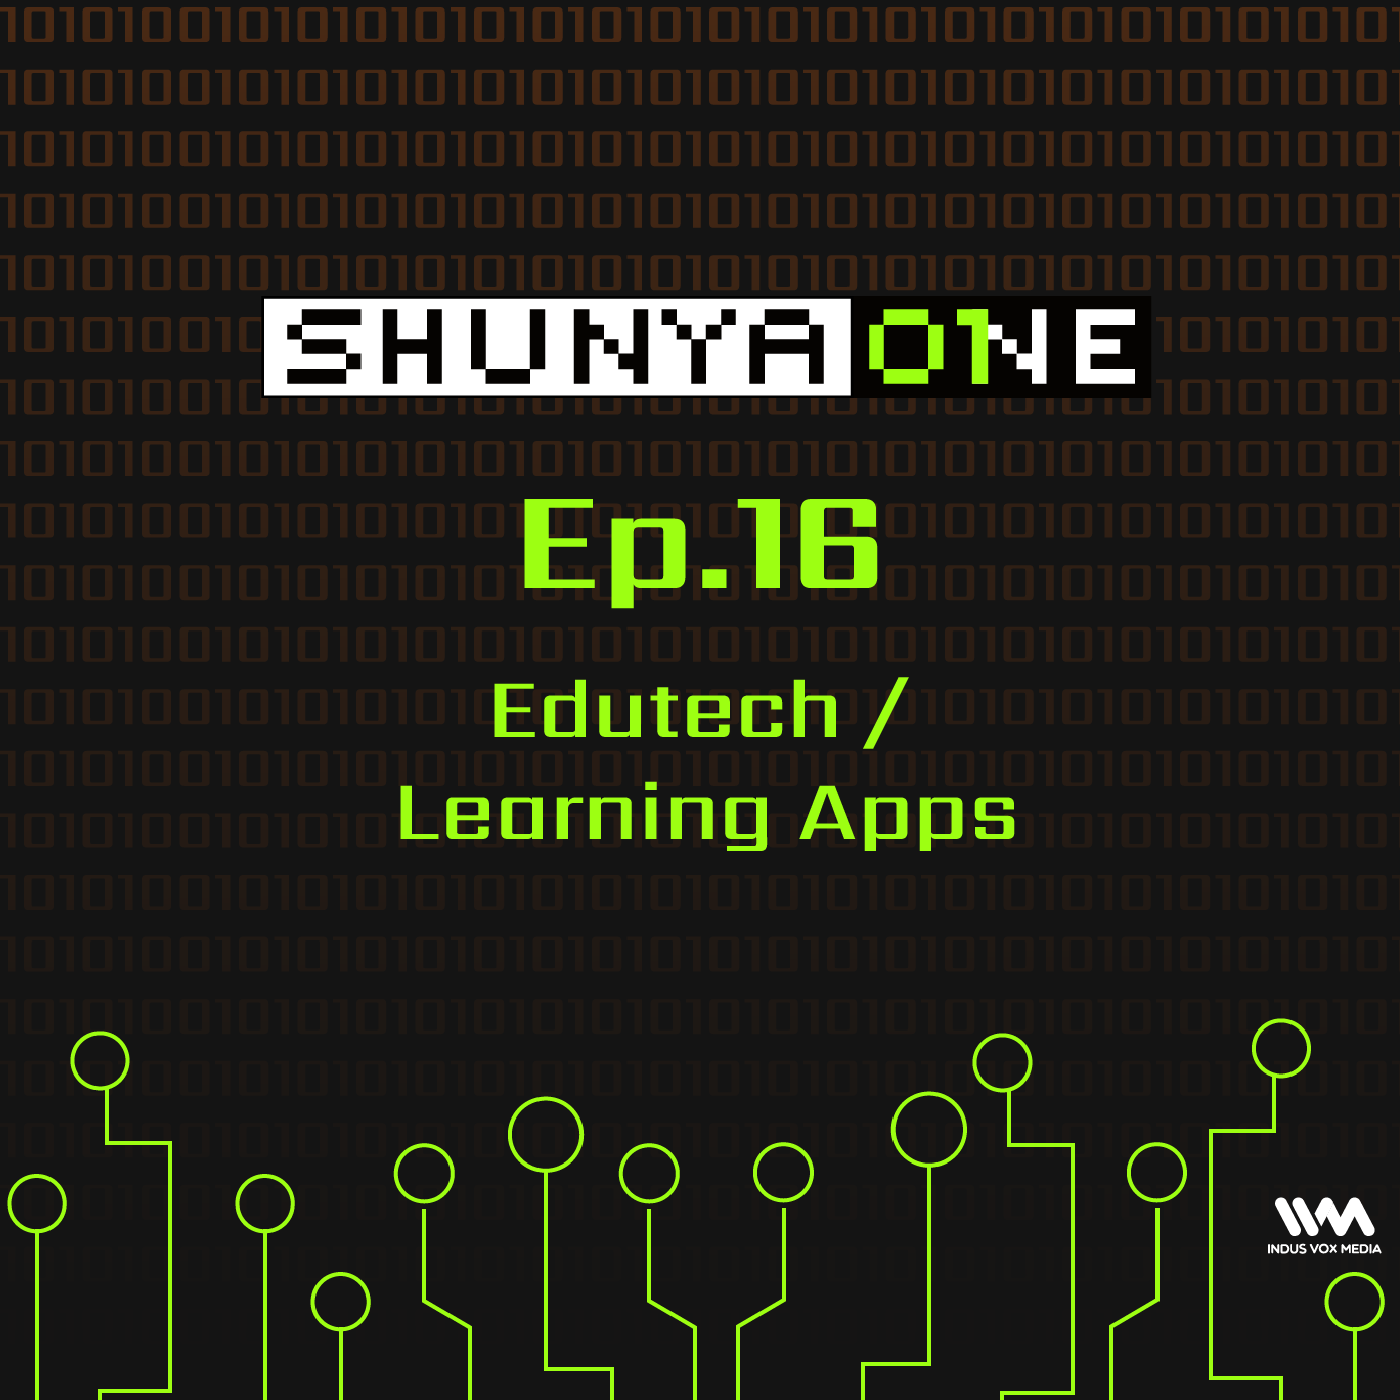 Feat. Amrut Dhumal: Edutech / Learning Apps